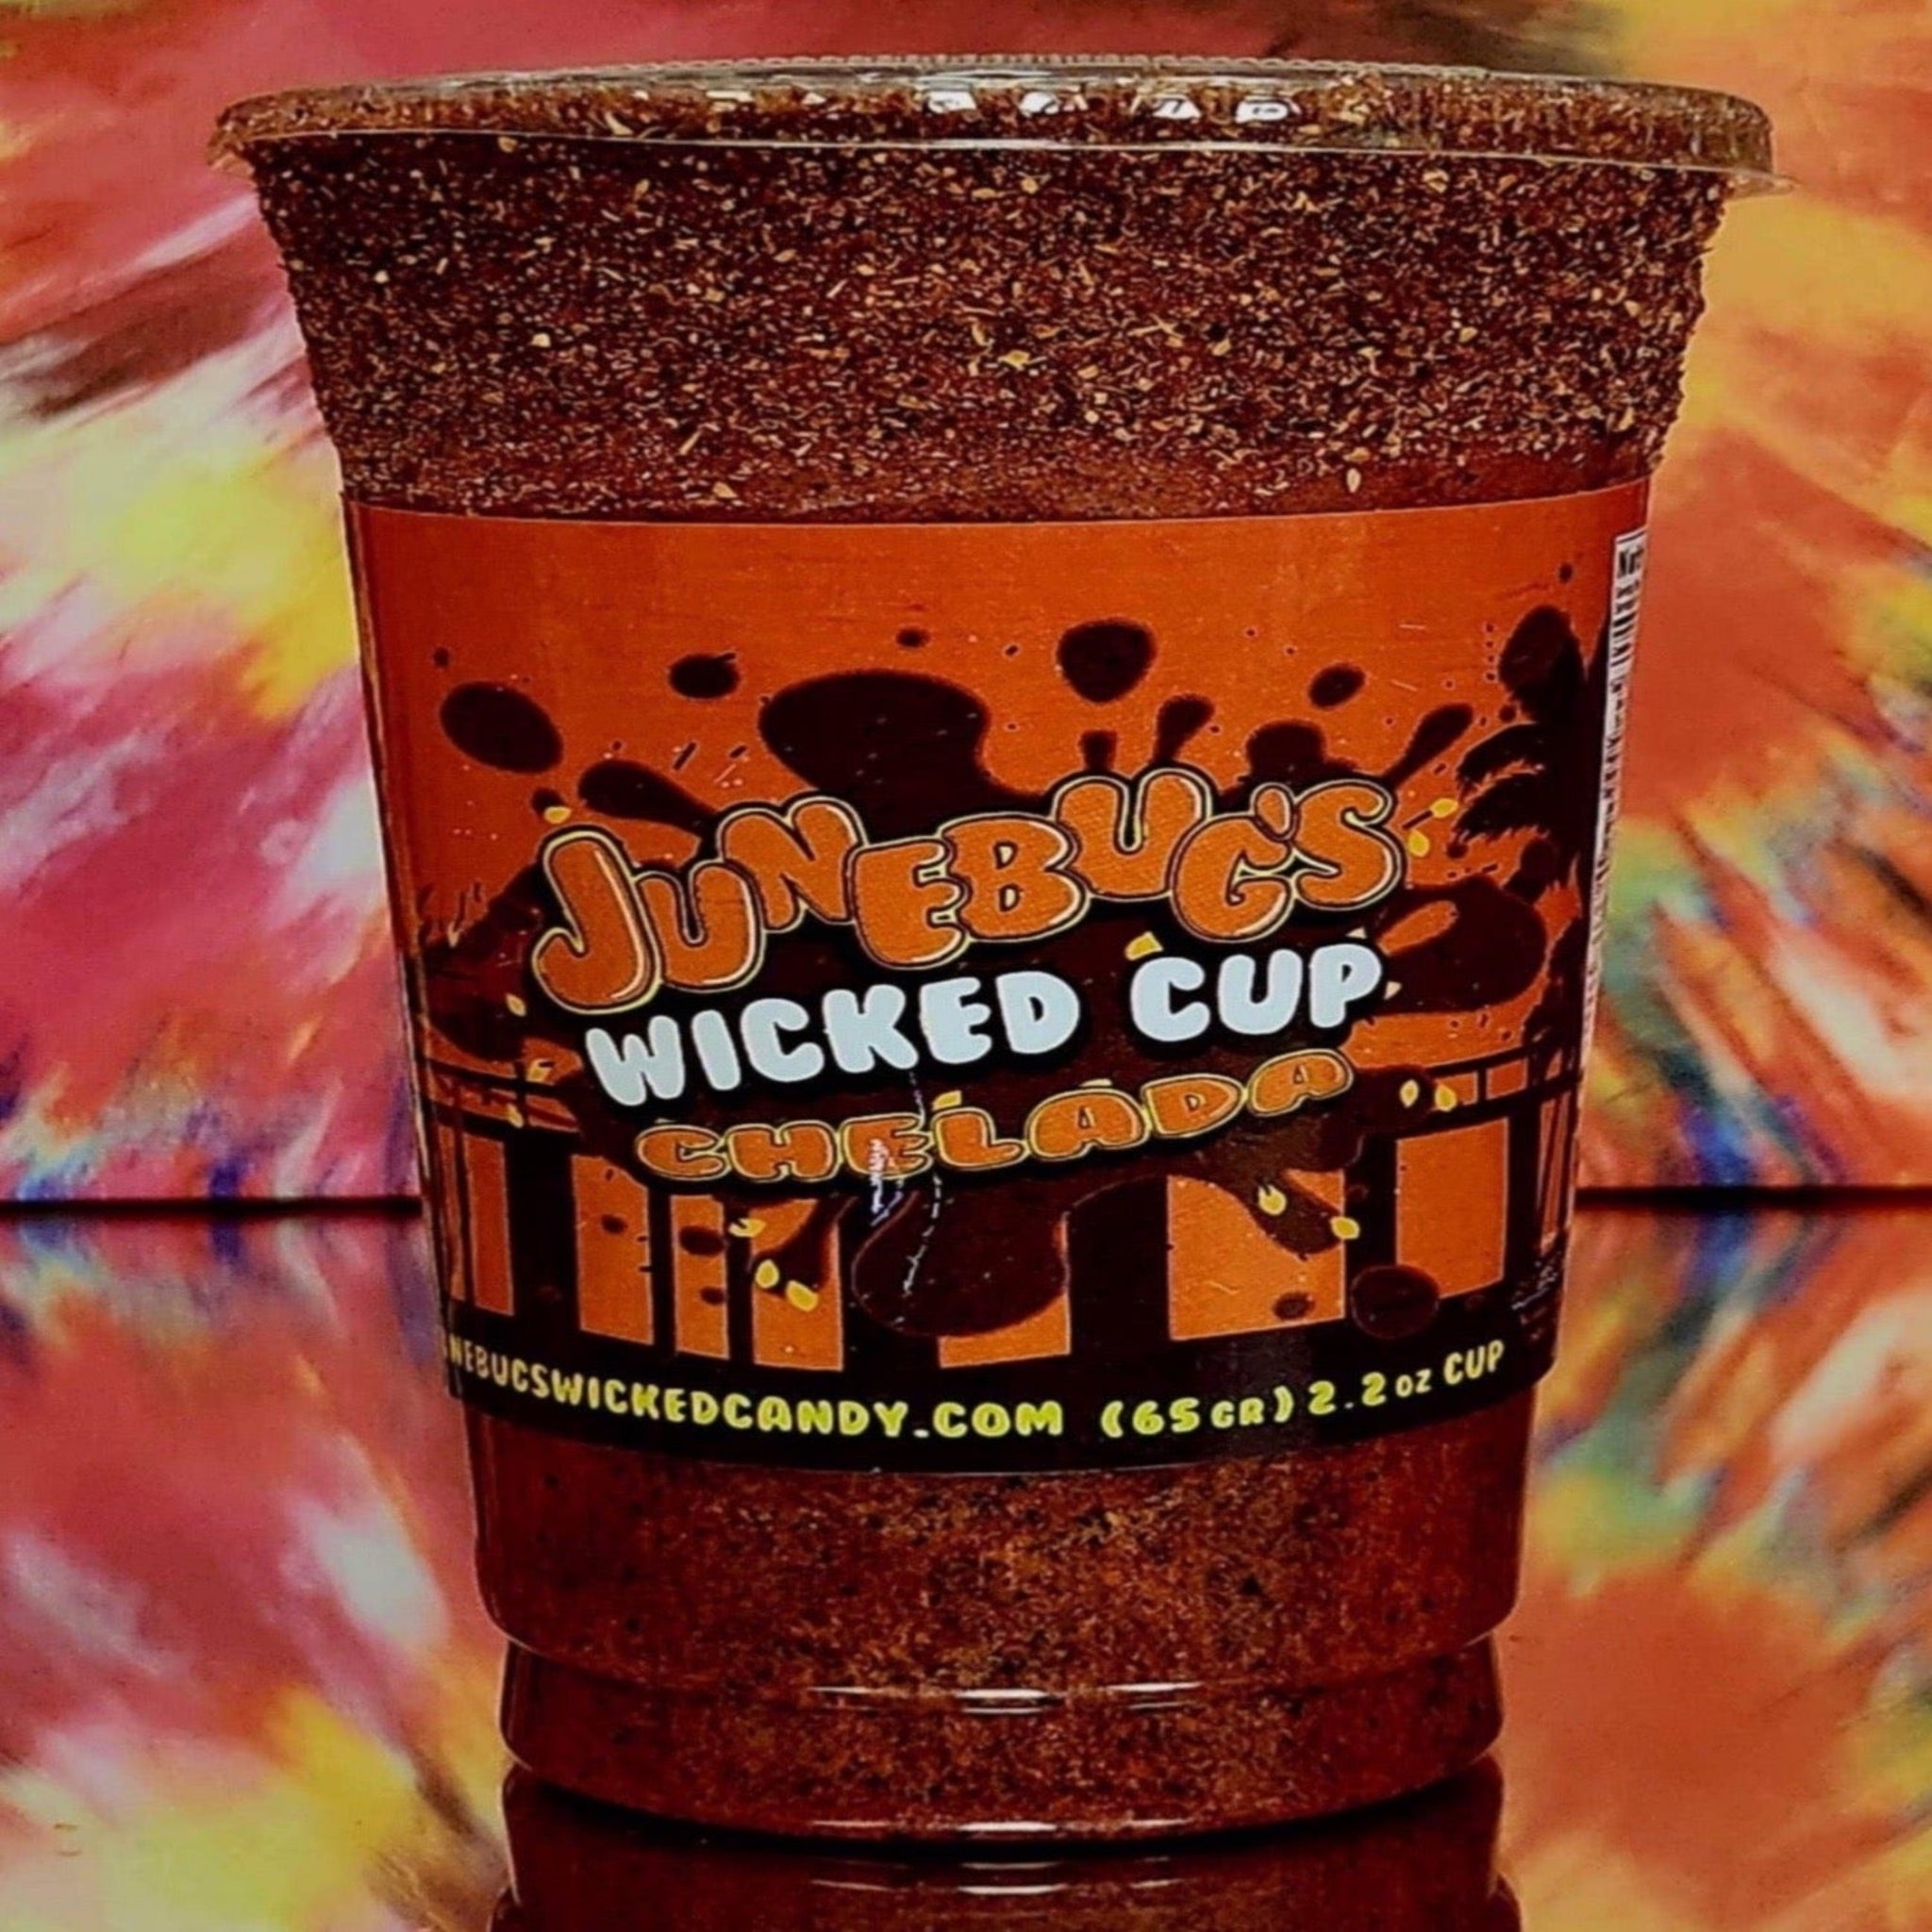 24oz Michelada Chelada Cup – Junebug's Wicked Candy